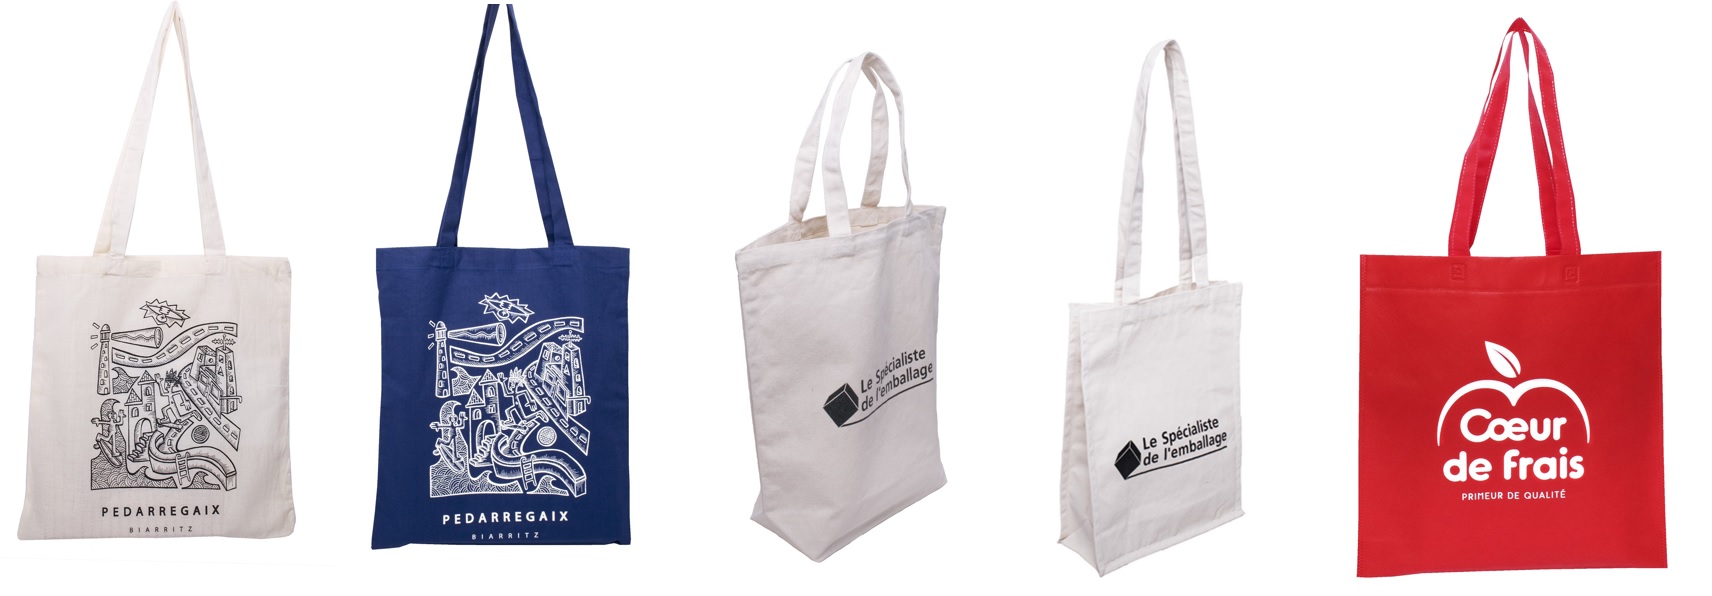 custom printed promotional tote bags